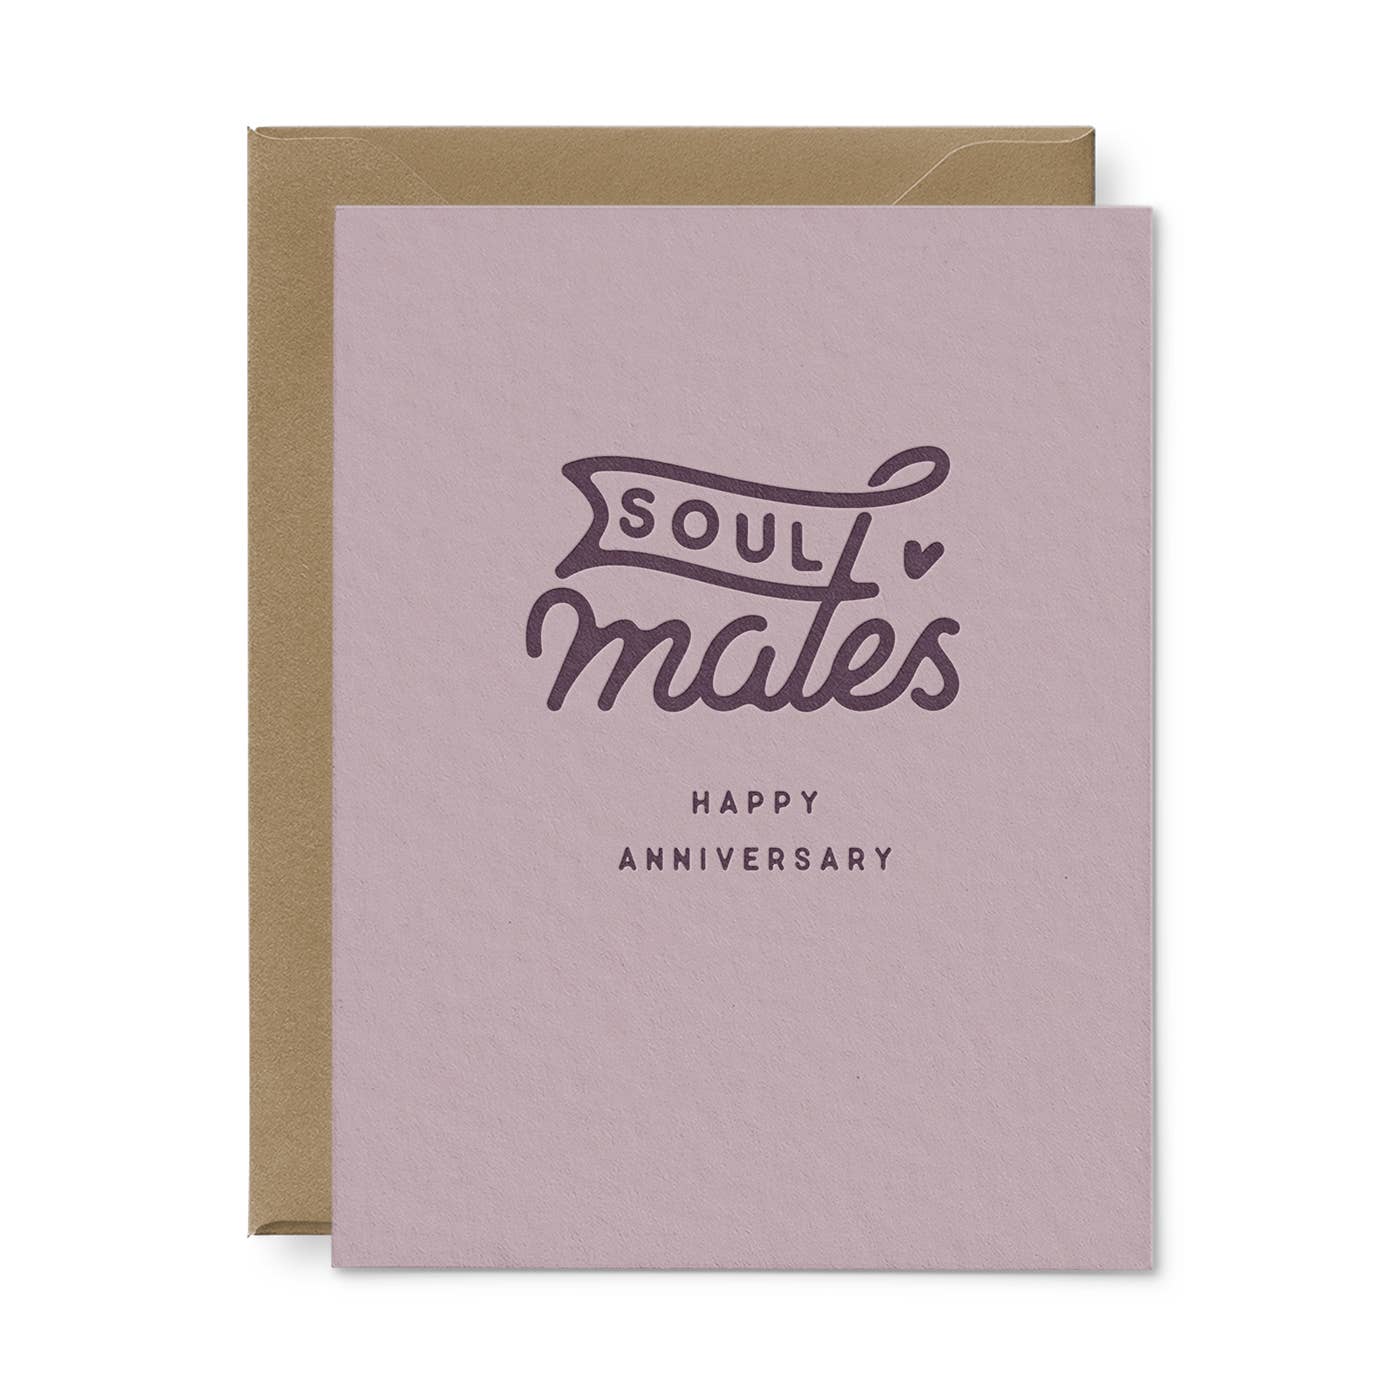 Soul Mates Happy Anniversary Greeting Card